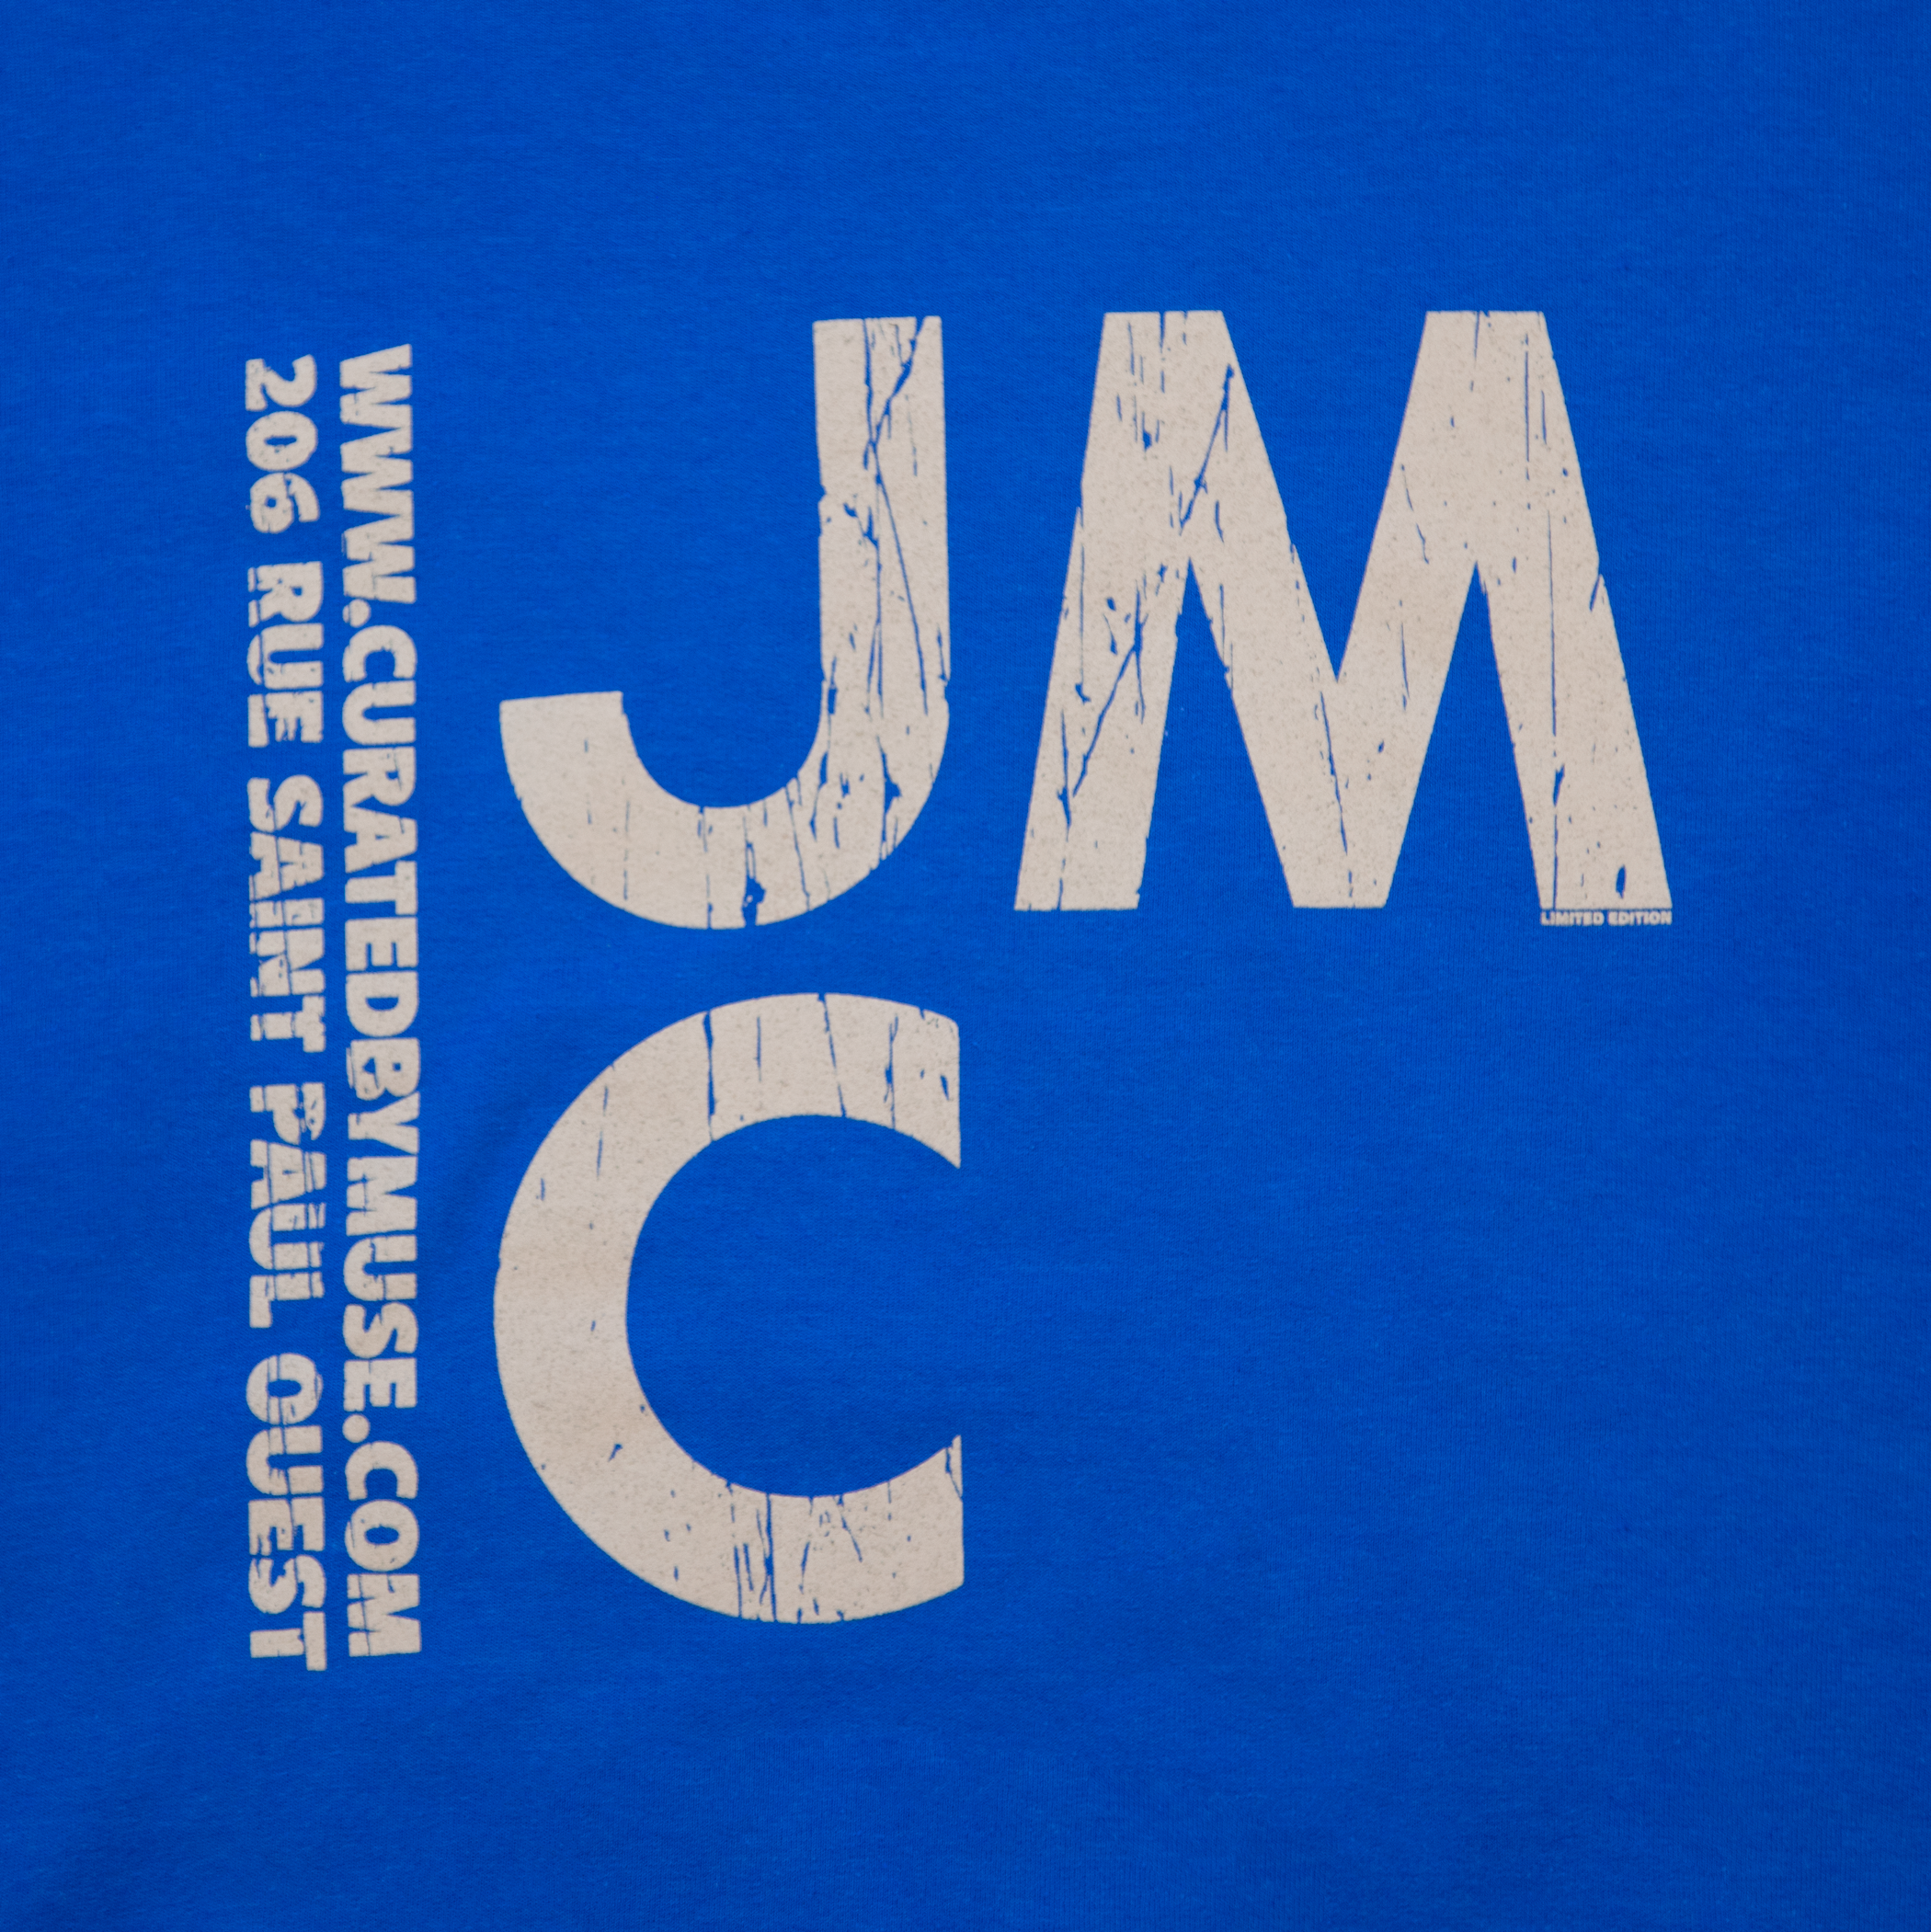 JMC x CBM Sweatshirt - Royal